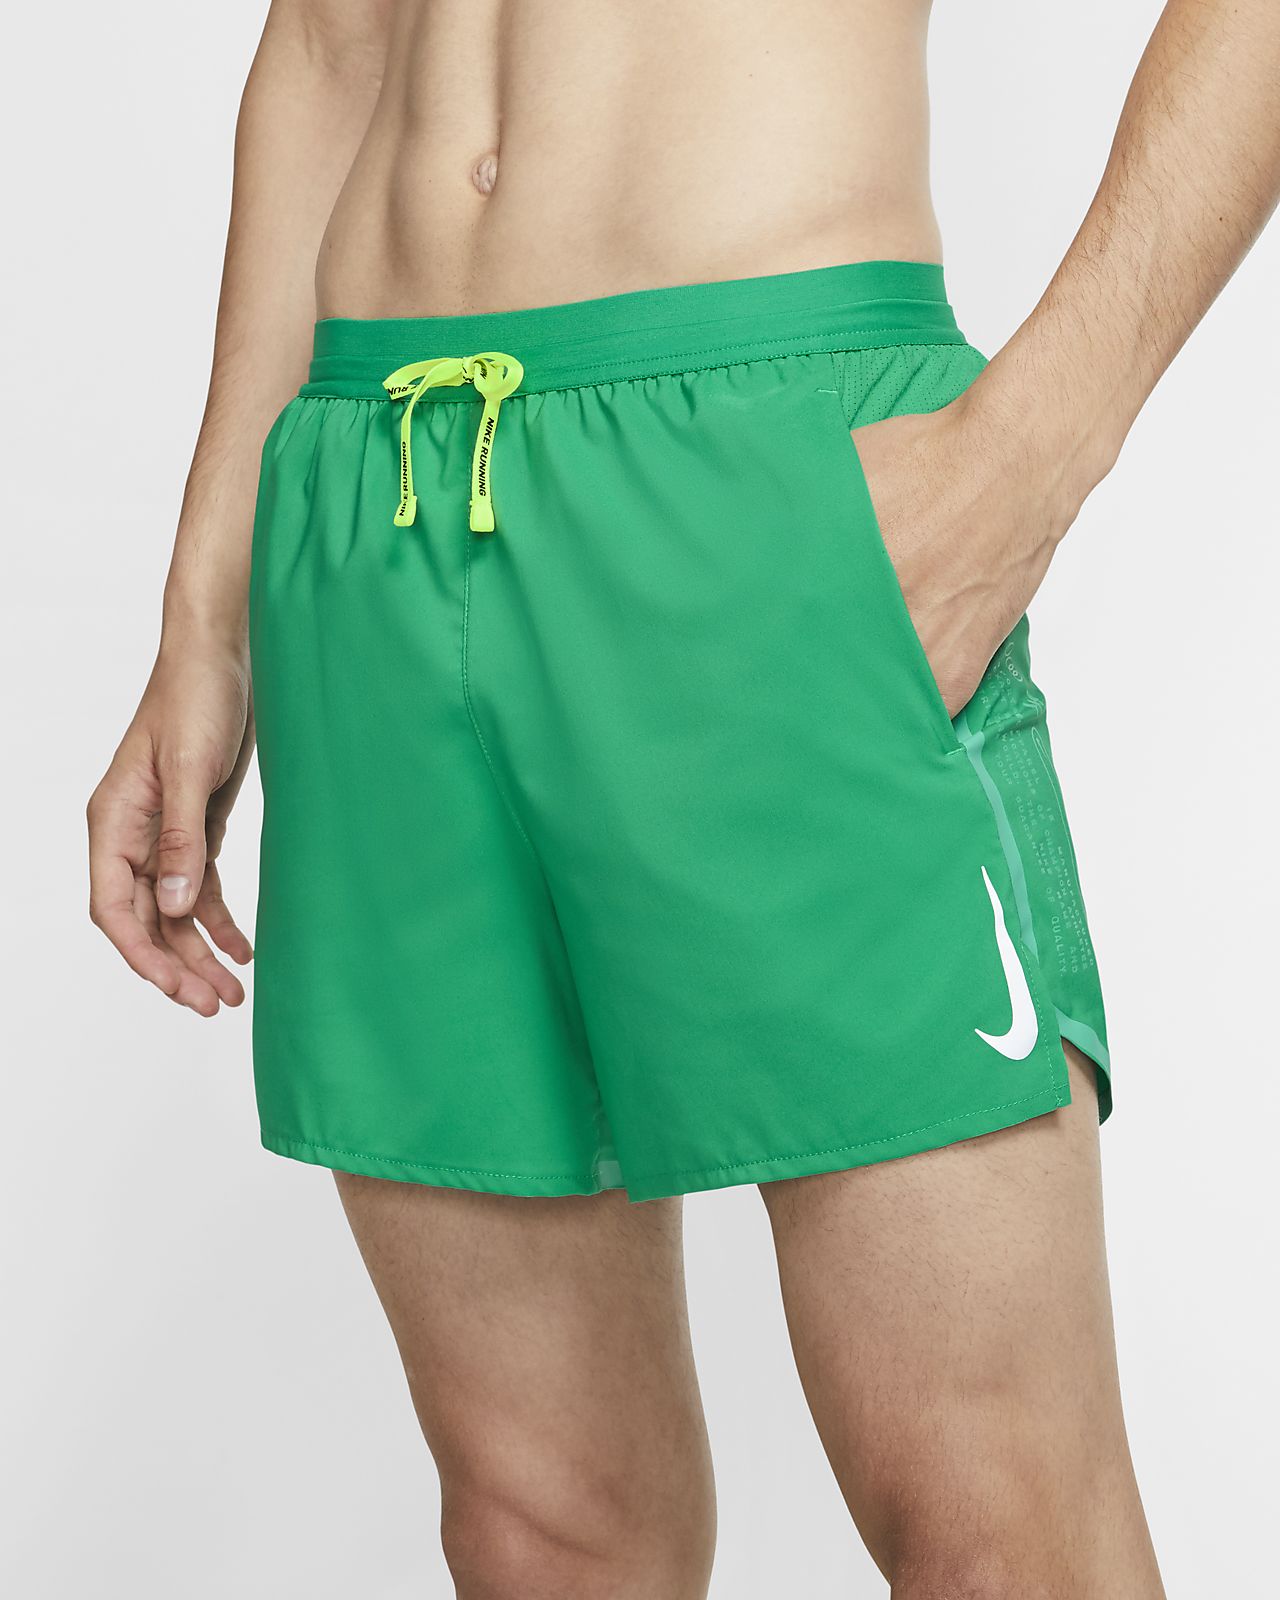 nike running shorts green